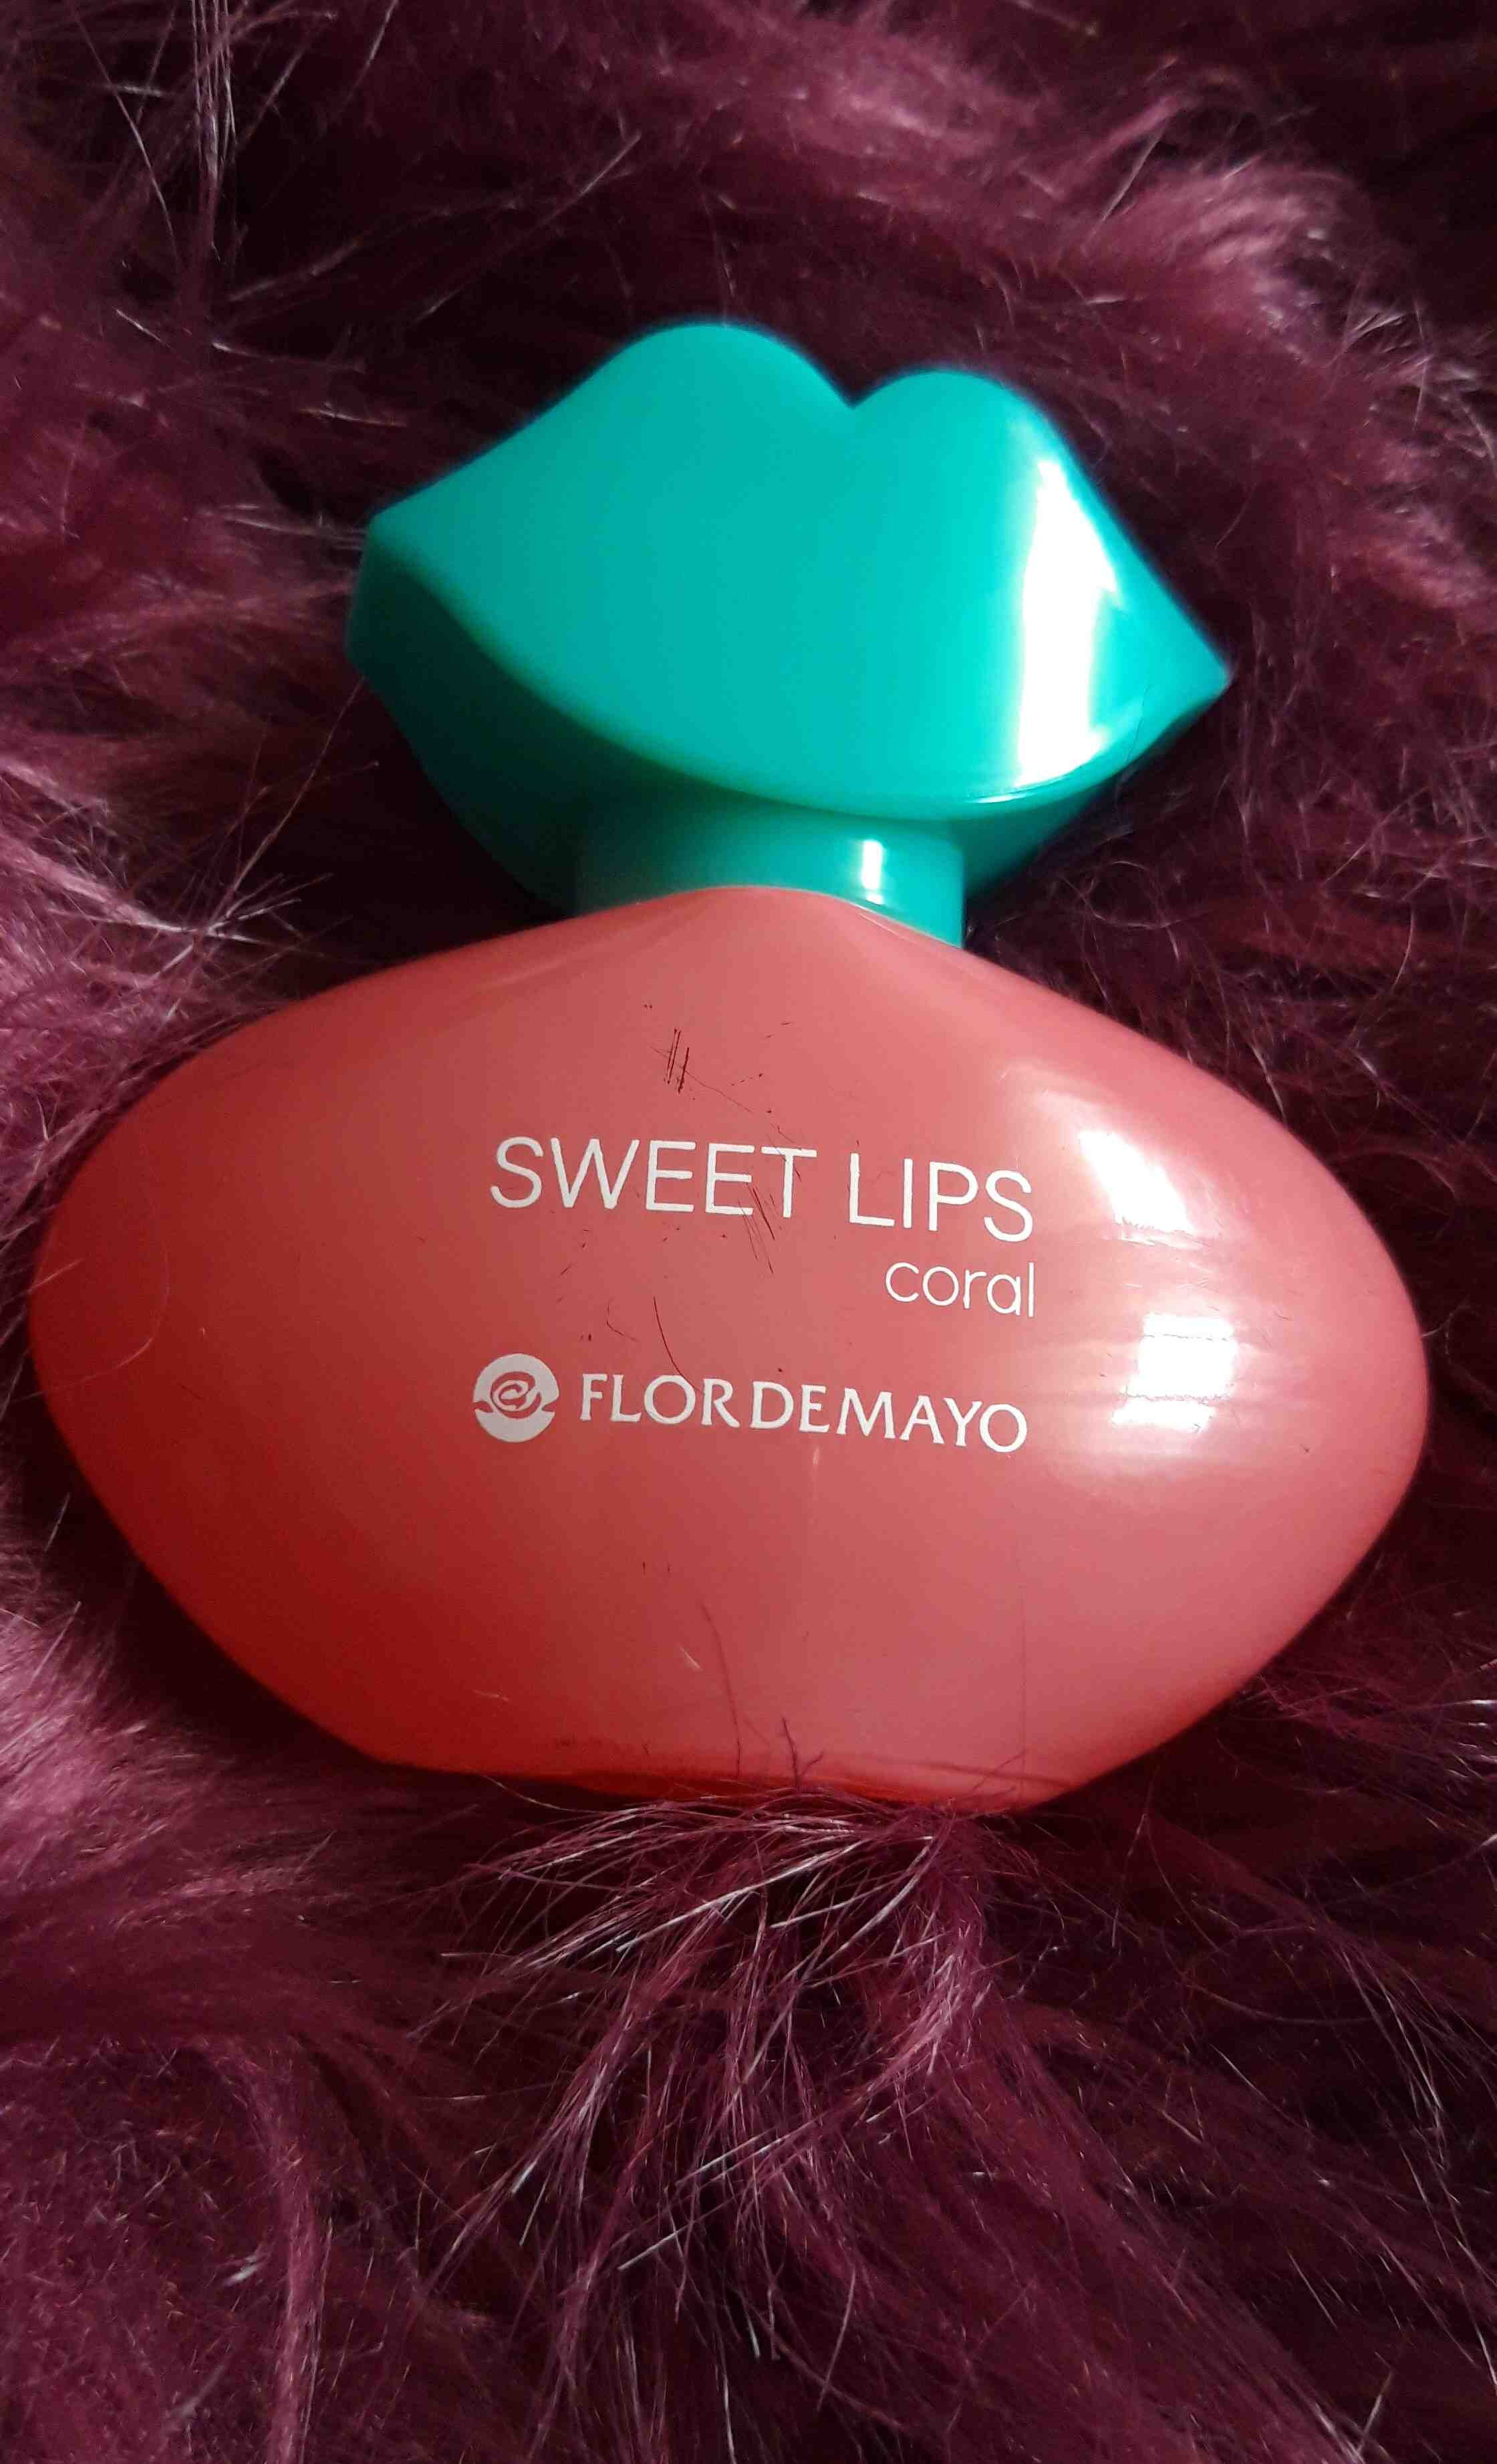 Sweet lips coral flor de mayo - Product - en